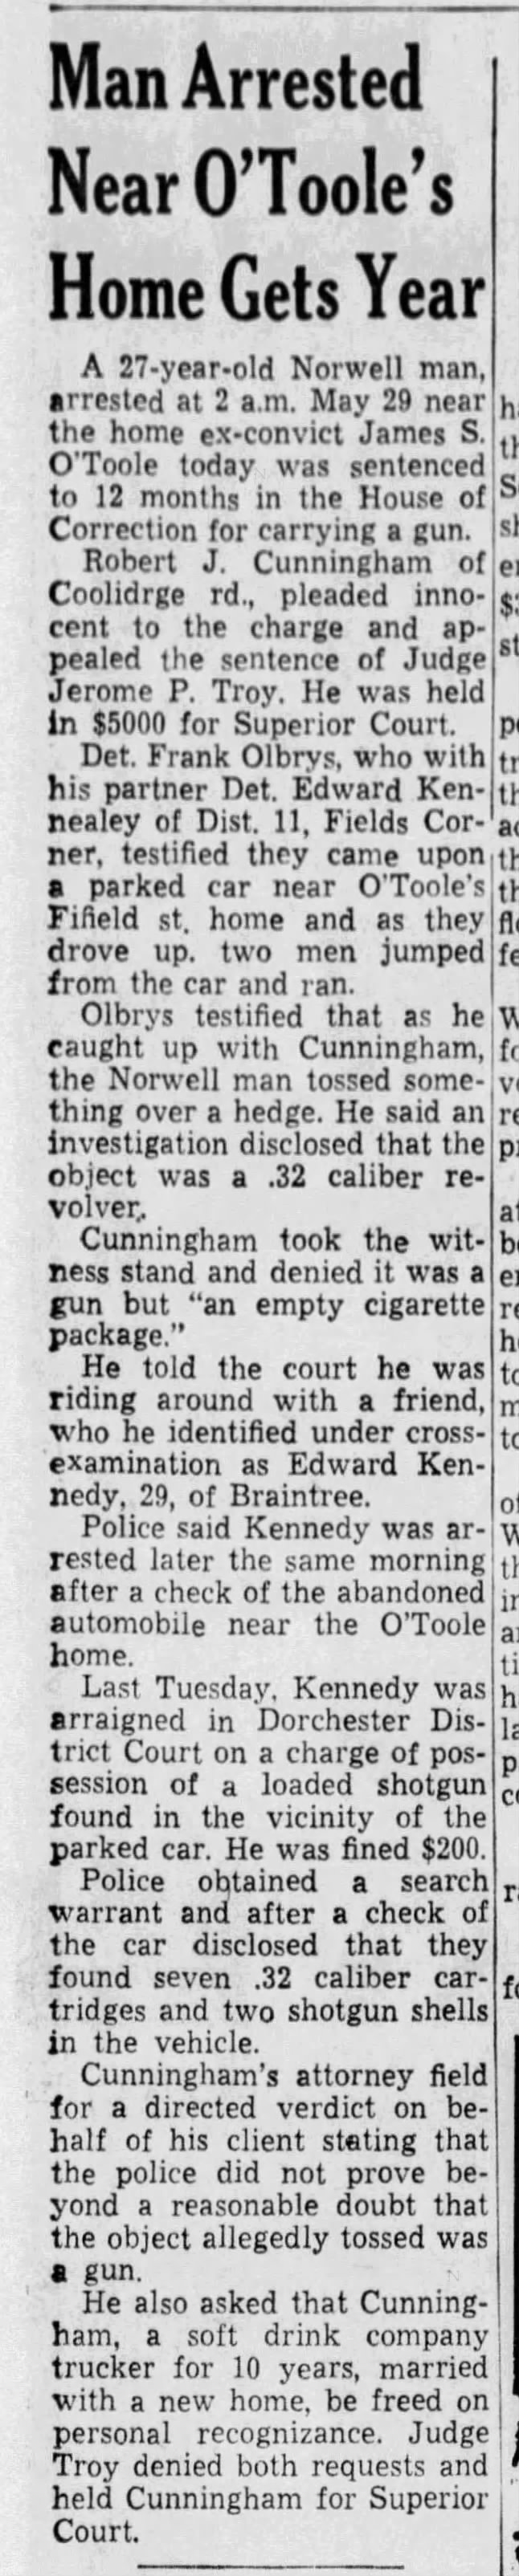 Cunningham 1 year (8 June 1965)